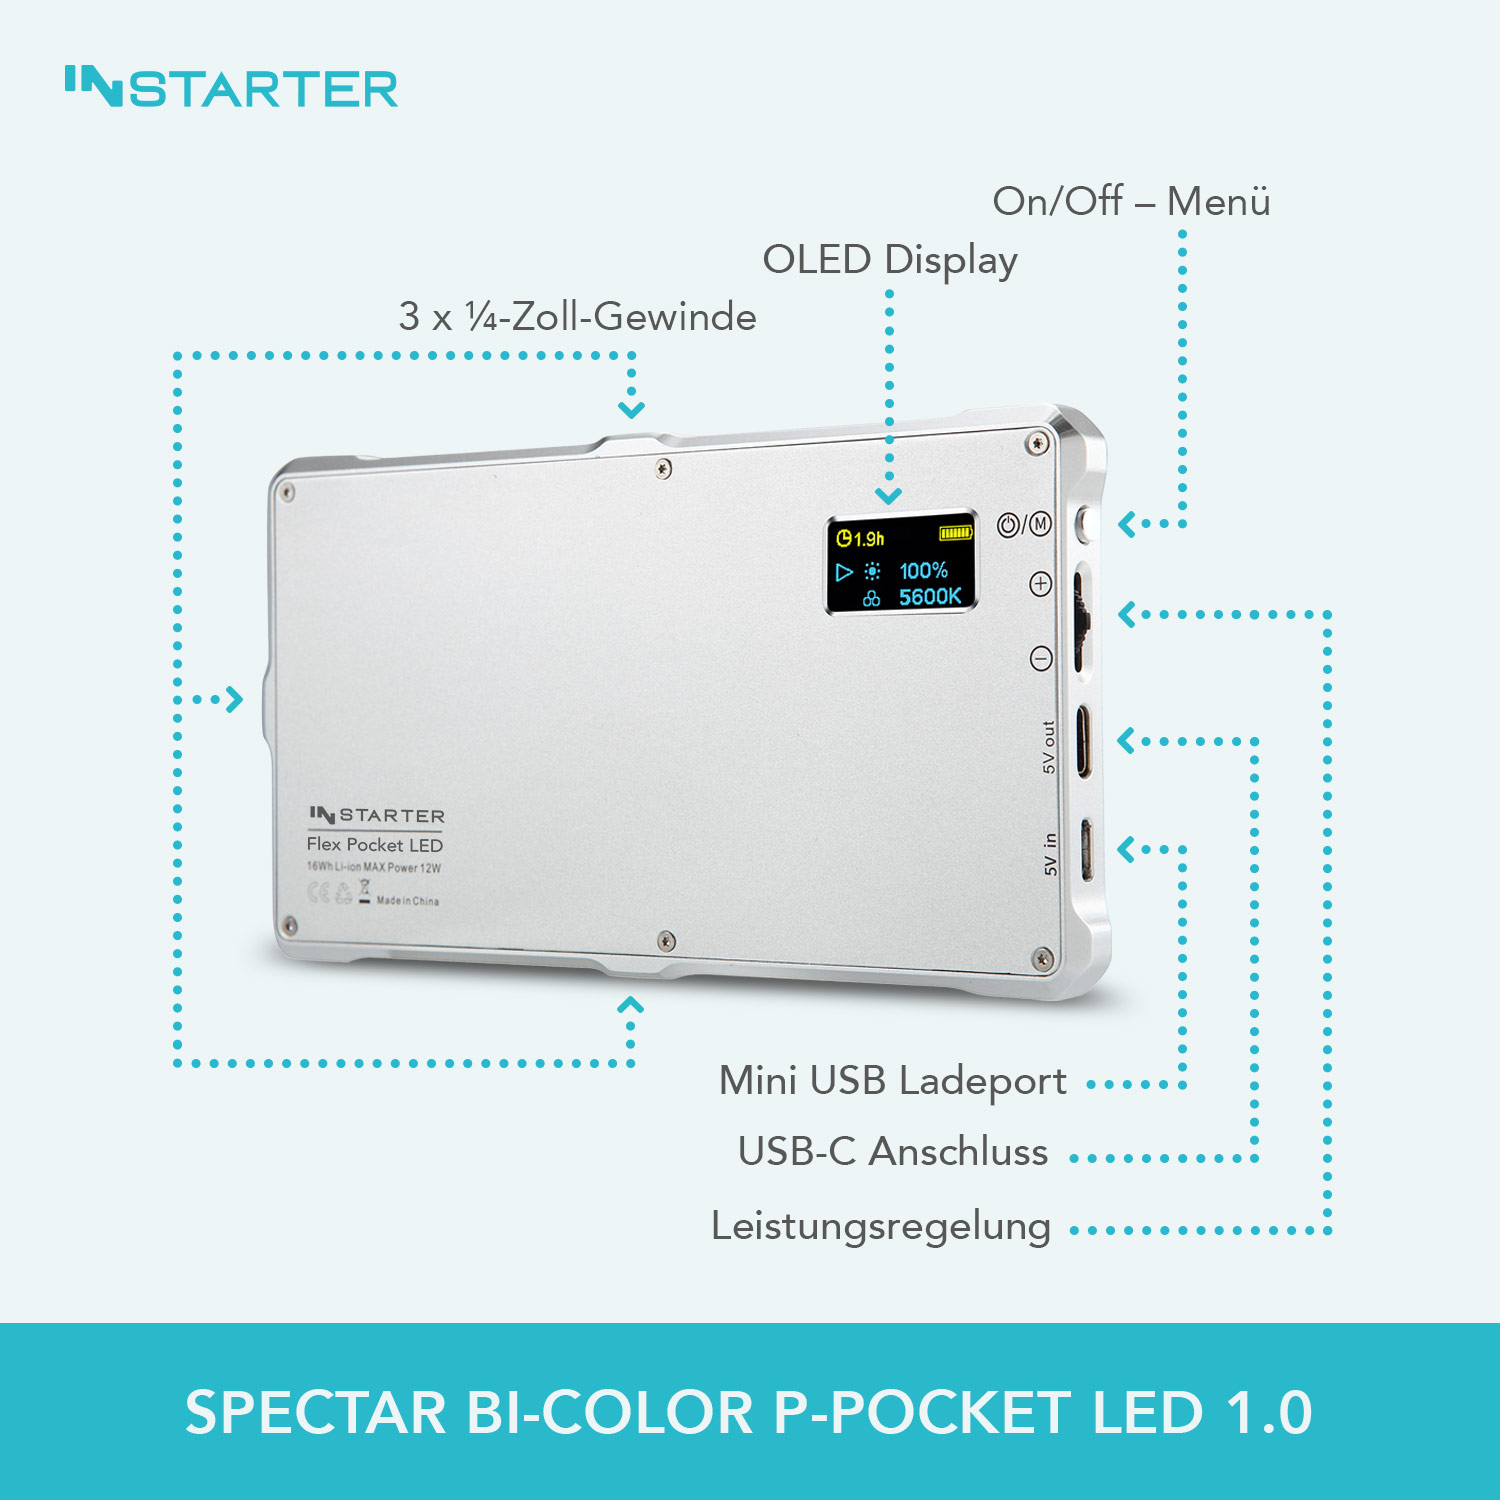 INStarter Spectar Bi-Color Flex P-Pocket 1.0 Features